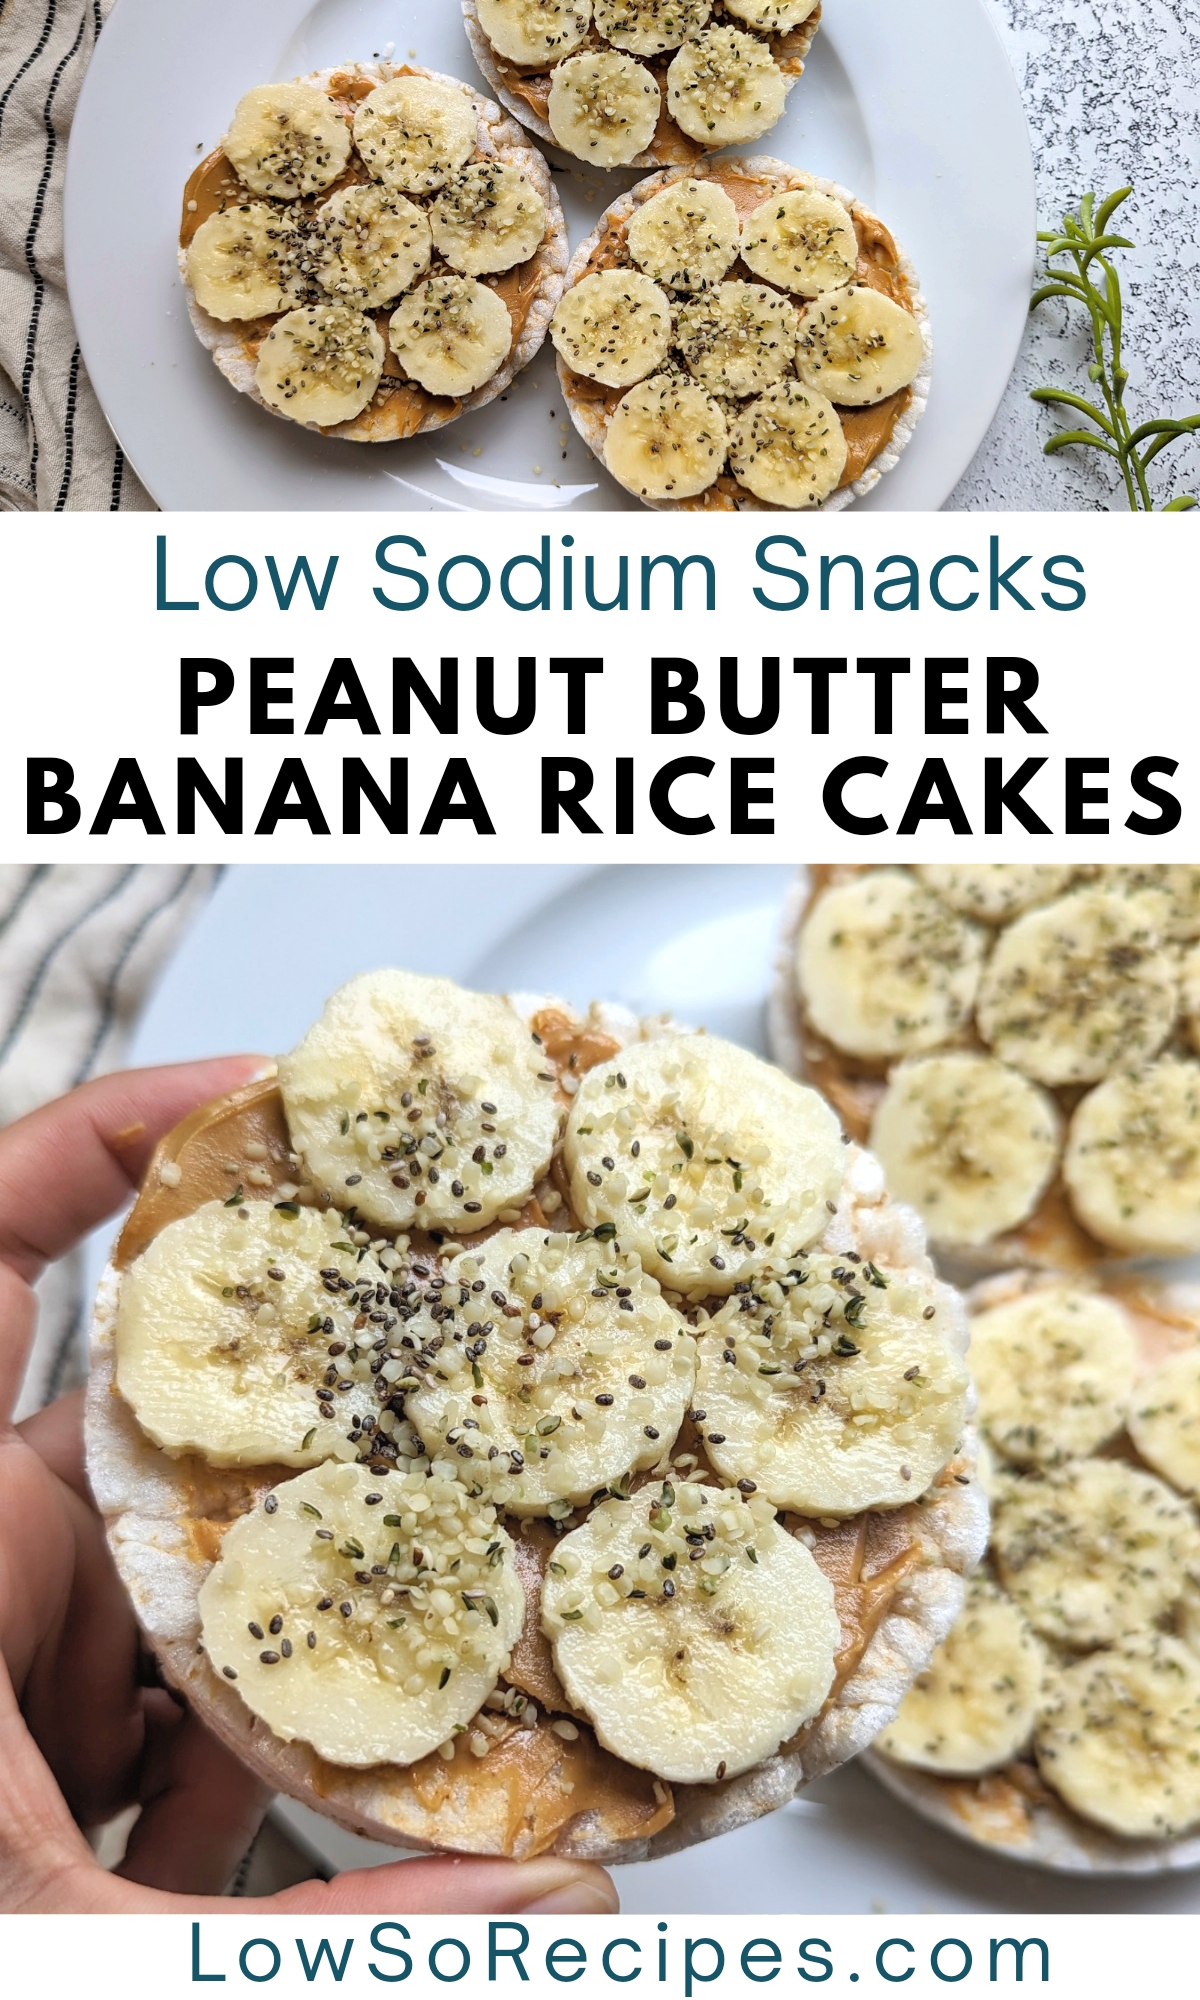 peanut butter banana rice cakes recipe low sodium snack ideas healthy and tasty snacks